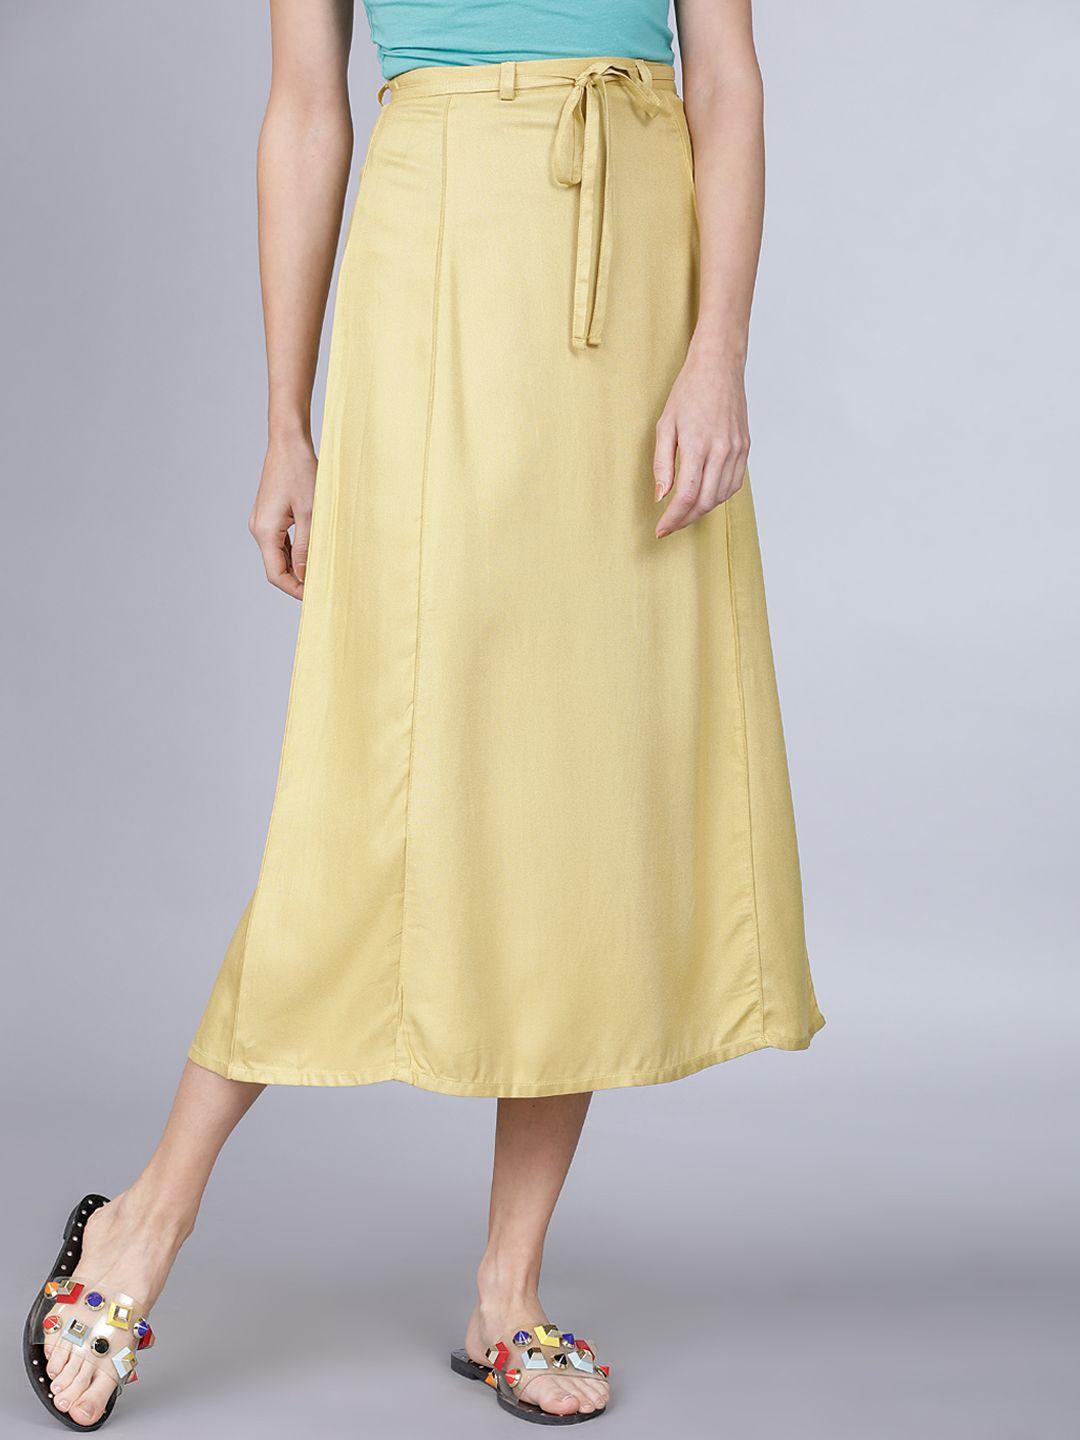 tokyo talkies women mustard yellow solid a-line midi skirt